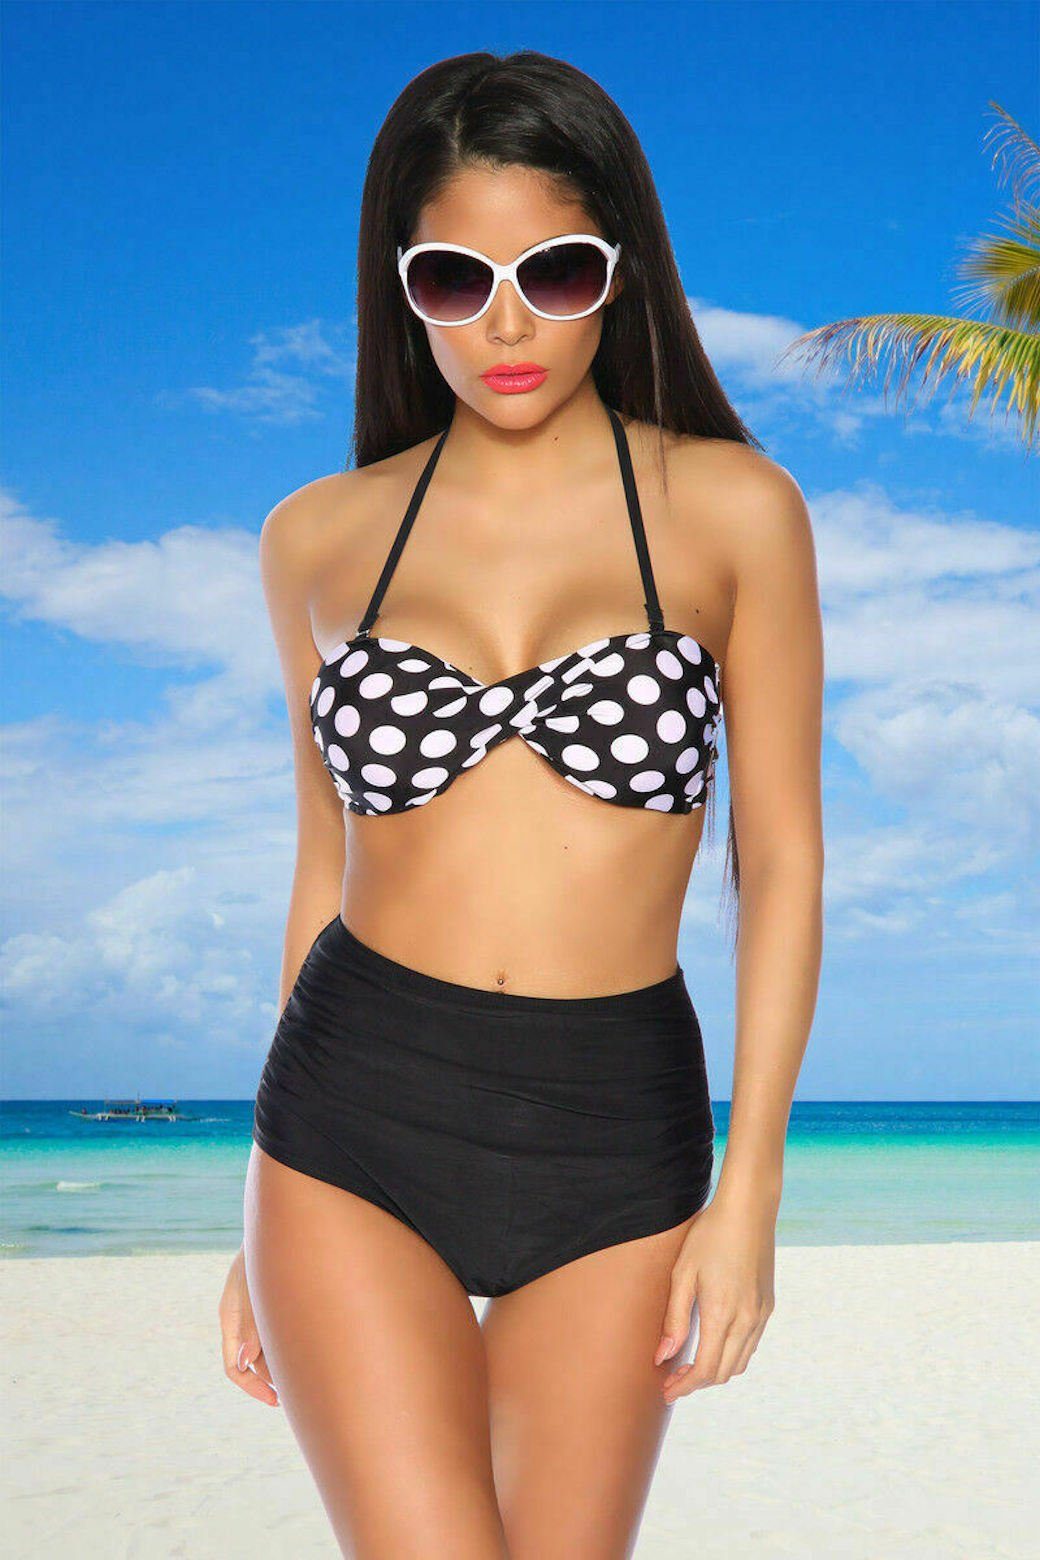 Bandeau-Bikini Vintage Rockabilly Bandeau-Bikini Bademode Samegame Dots schwarz in Neckholder weiß Polka Bikini